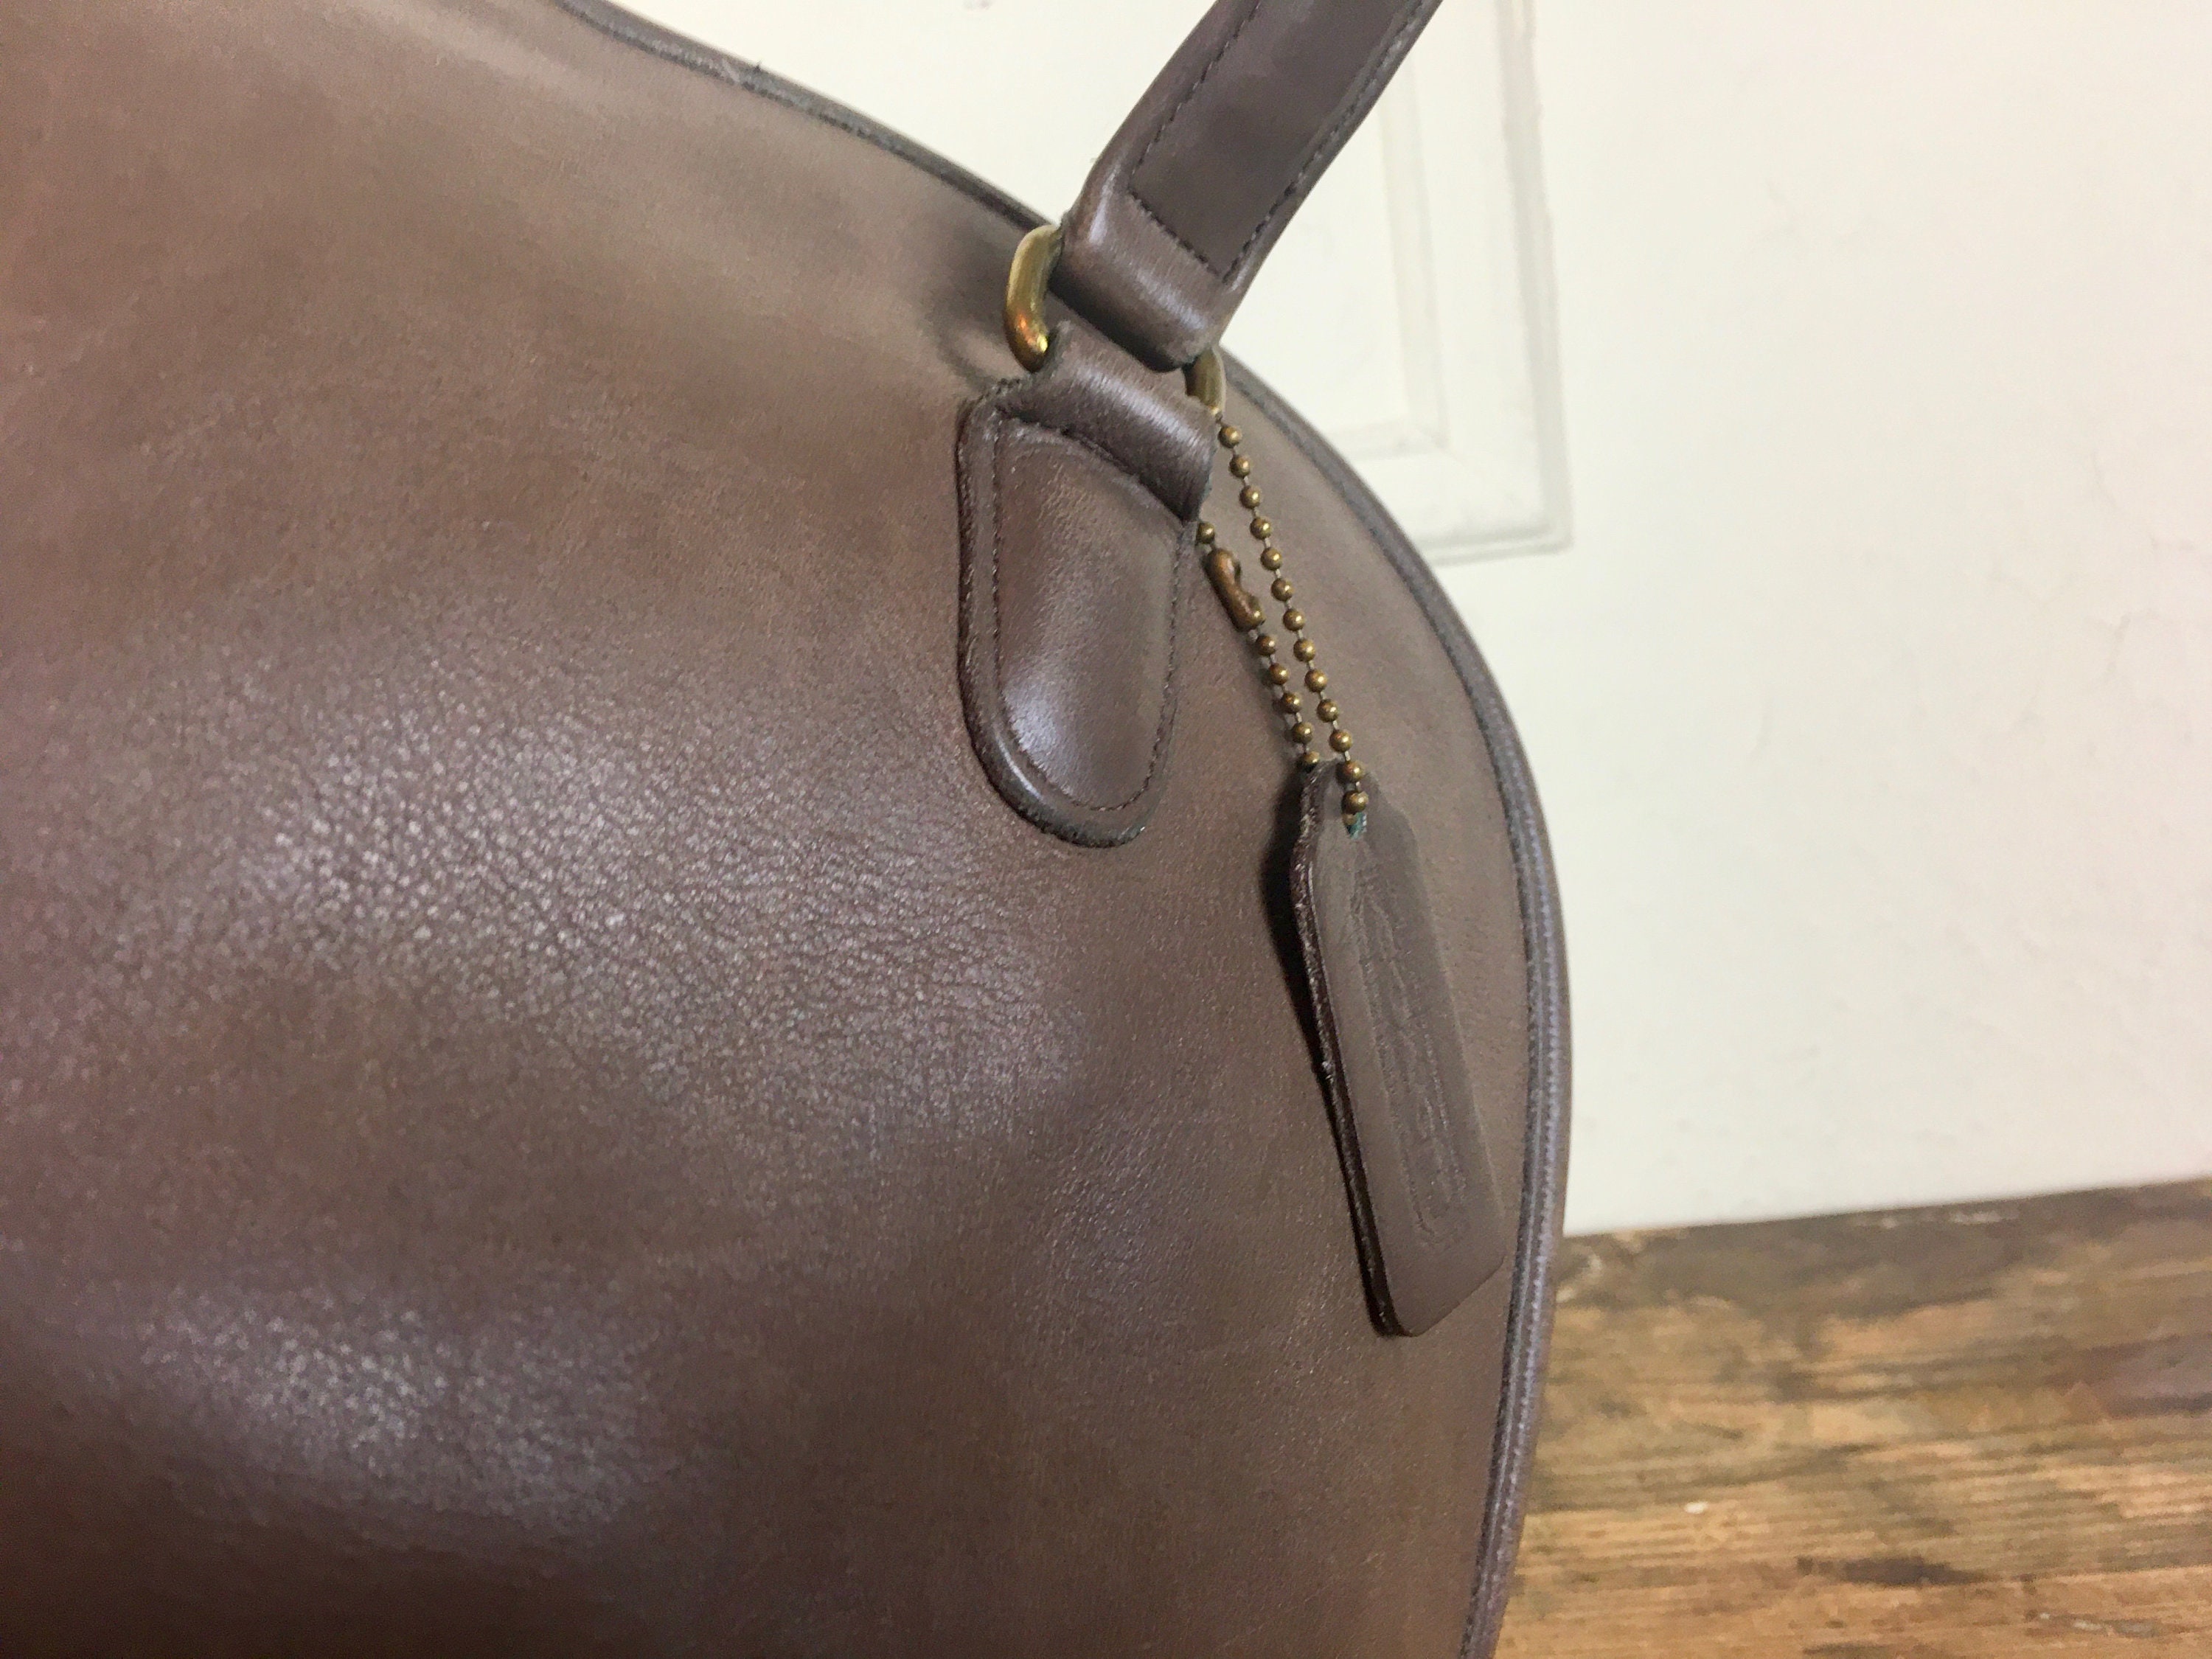 1990s Coach Pelham Shoulder Bag / Domed Bowler Bag / 9958 - Vintage Taupe / Putty Brown Leather Classic Handbag, Purse